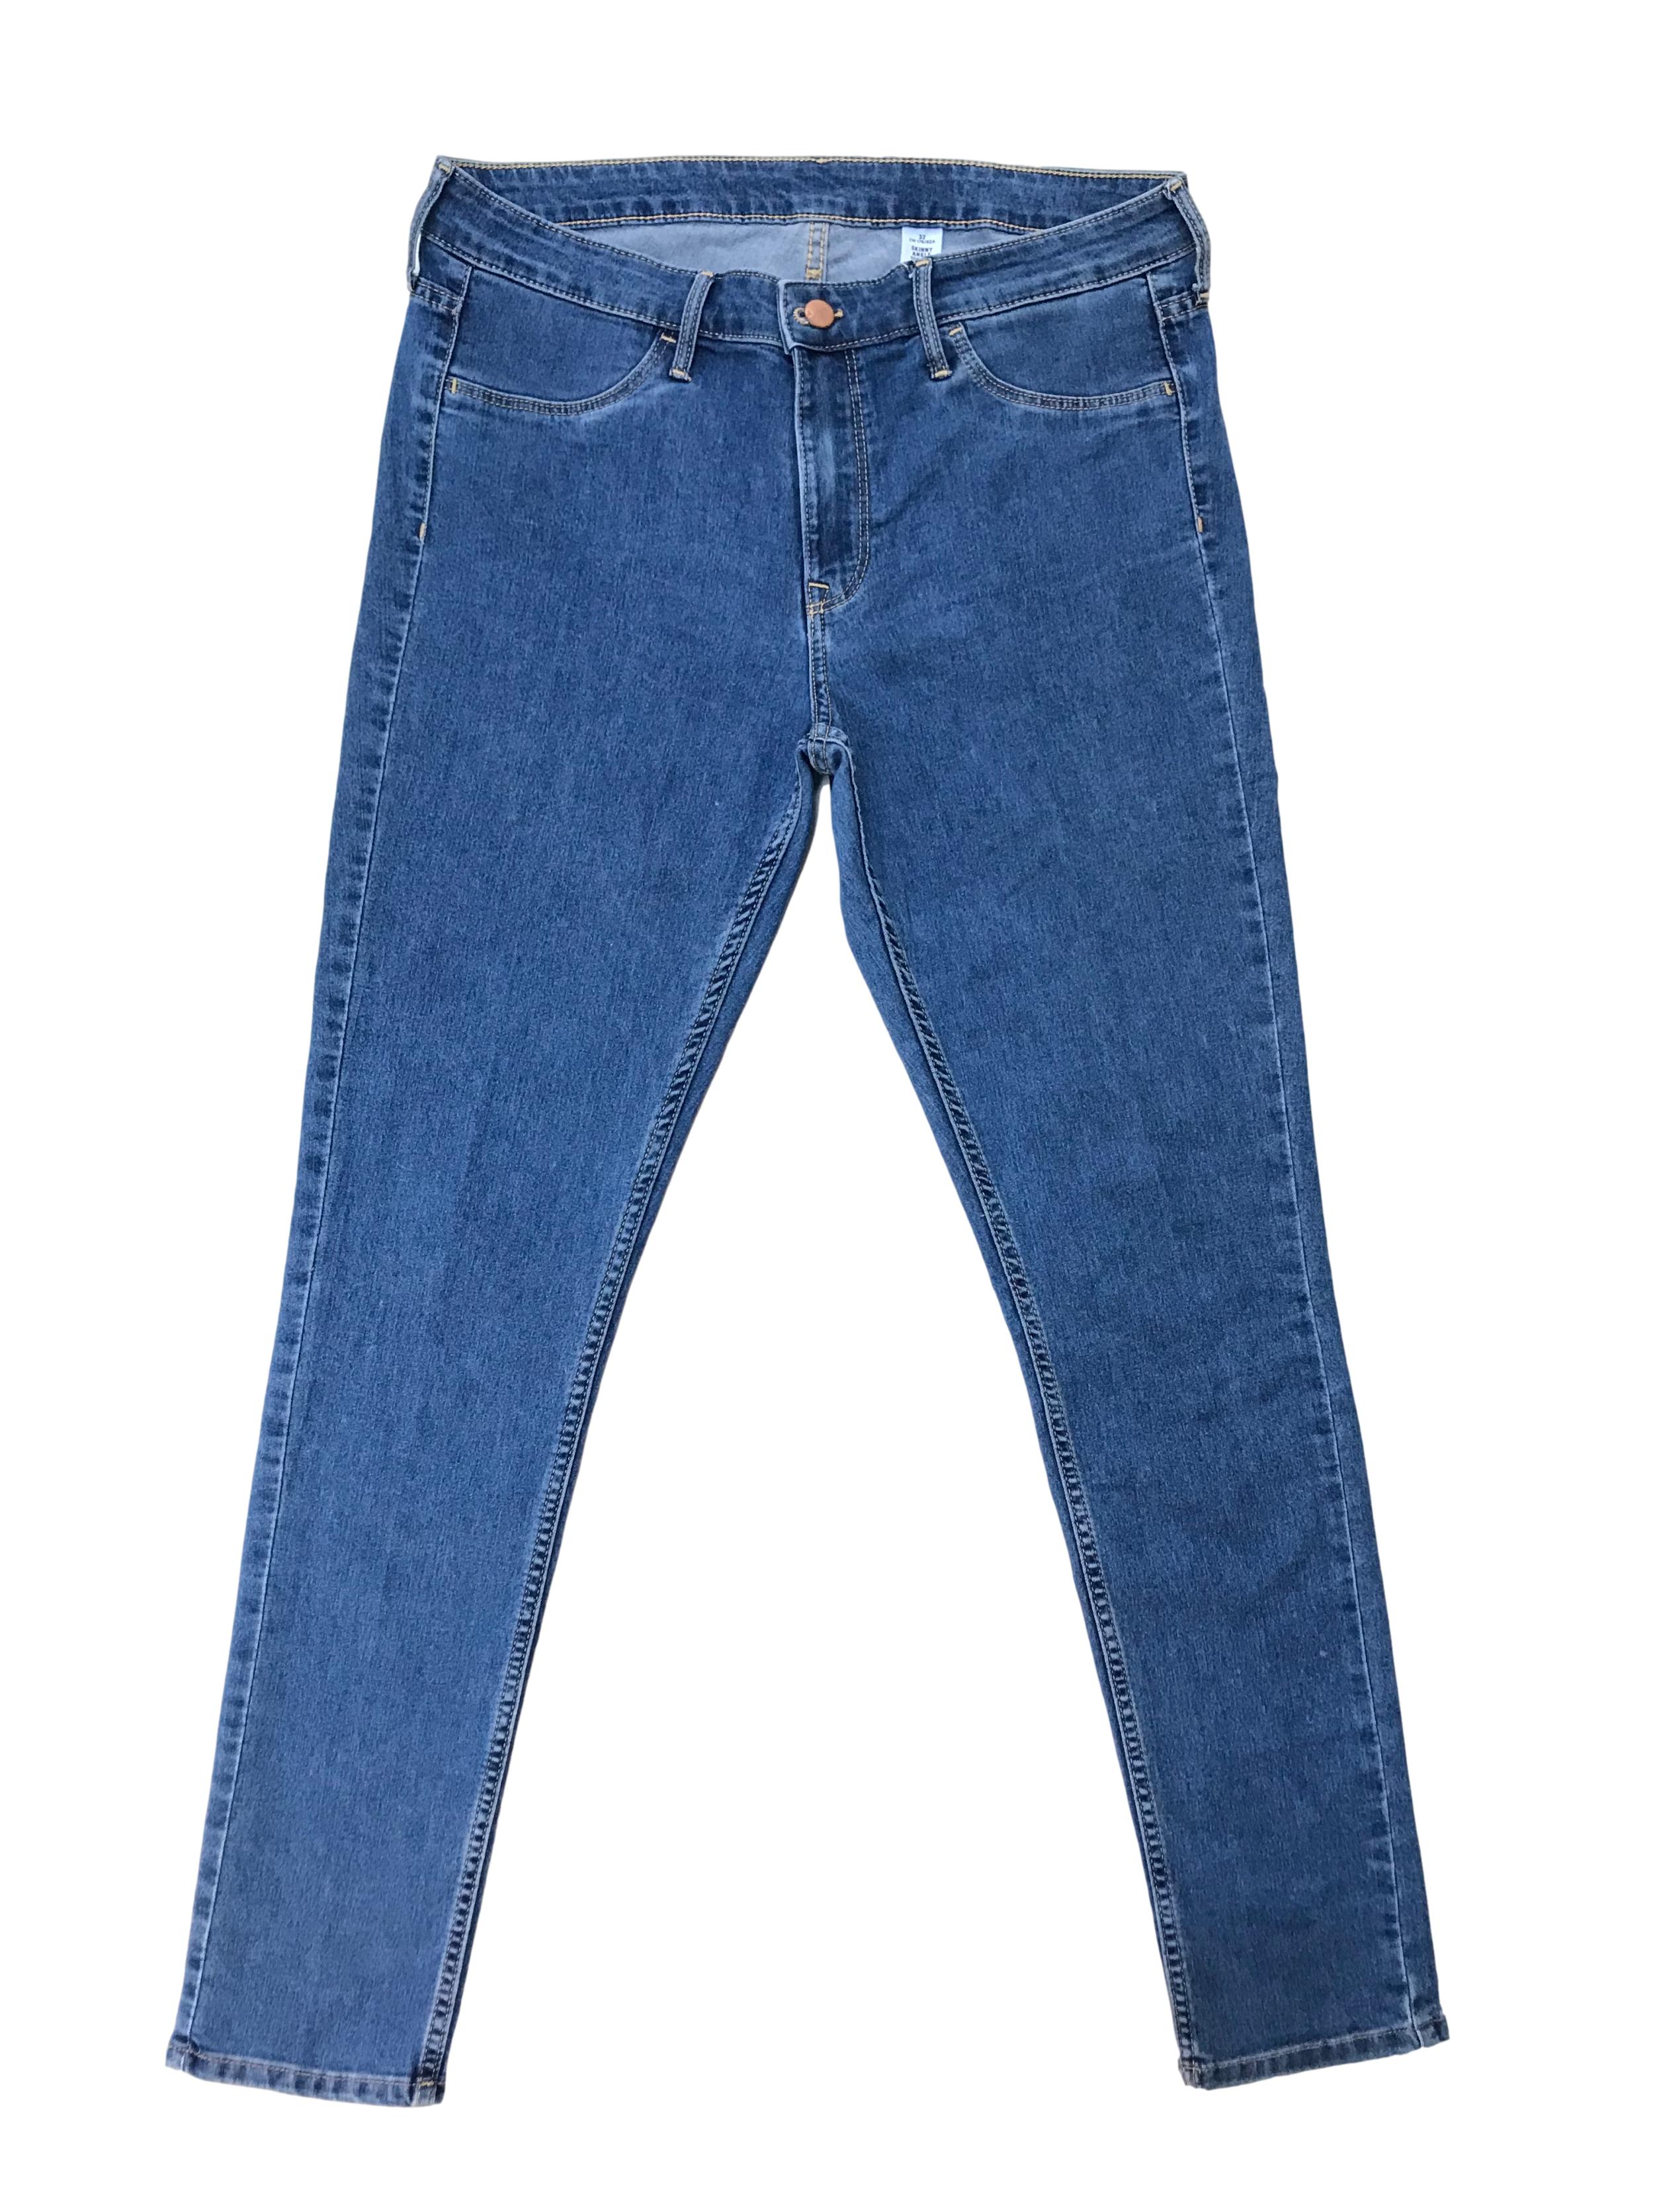 Jegging H&M azul con bolsillos traseros, regular waist. Pretina 86cm 